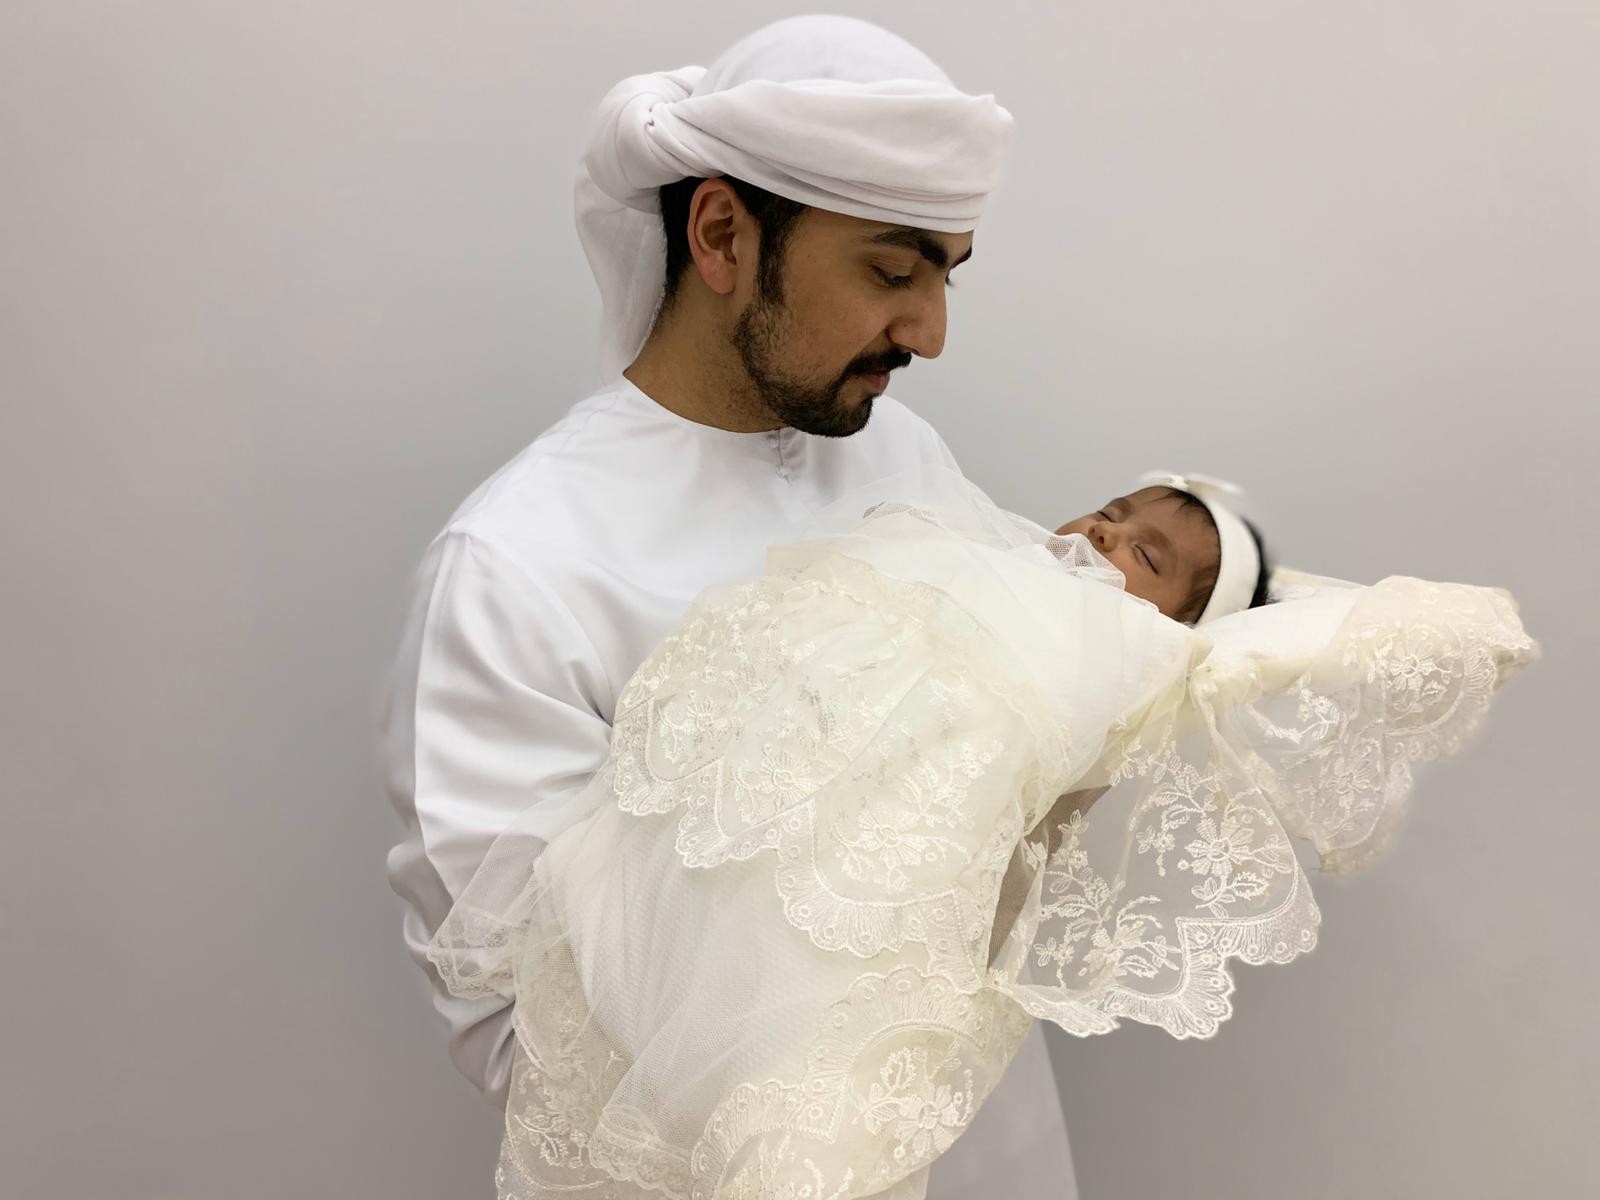 Two-month-old Zeina Al Amiri, the child of Dr. Abdullah Al Amiri